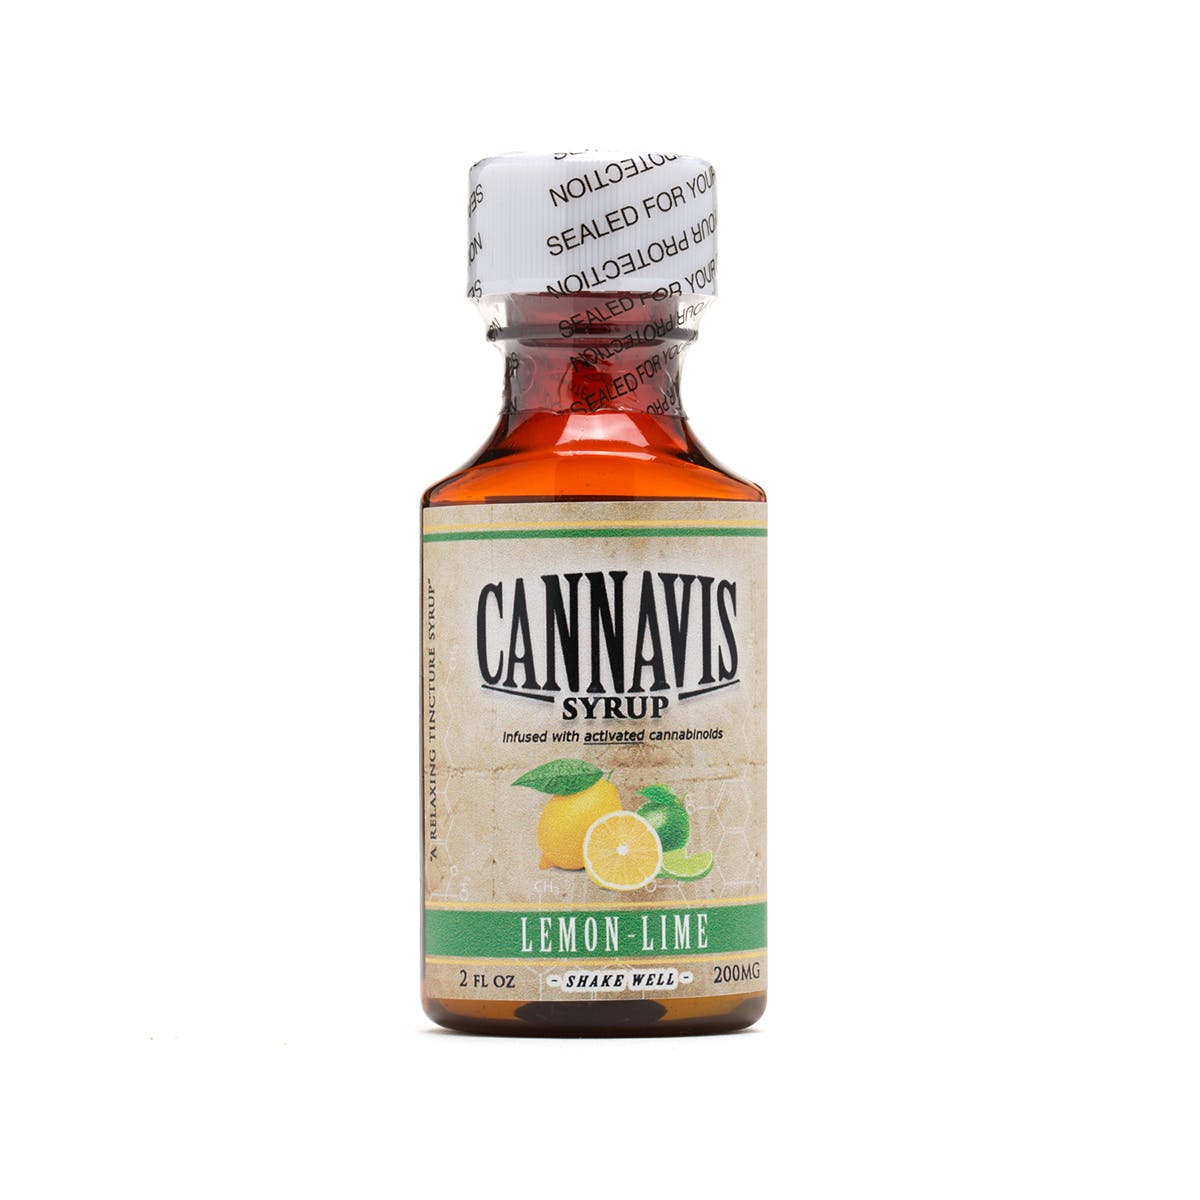 marijuana-dispensaries-138-n-san-fernando-rd-los-angeles-cannavis-syrup-2c-lemon-lime-200mg